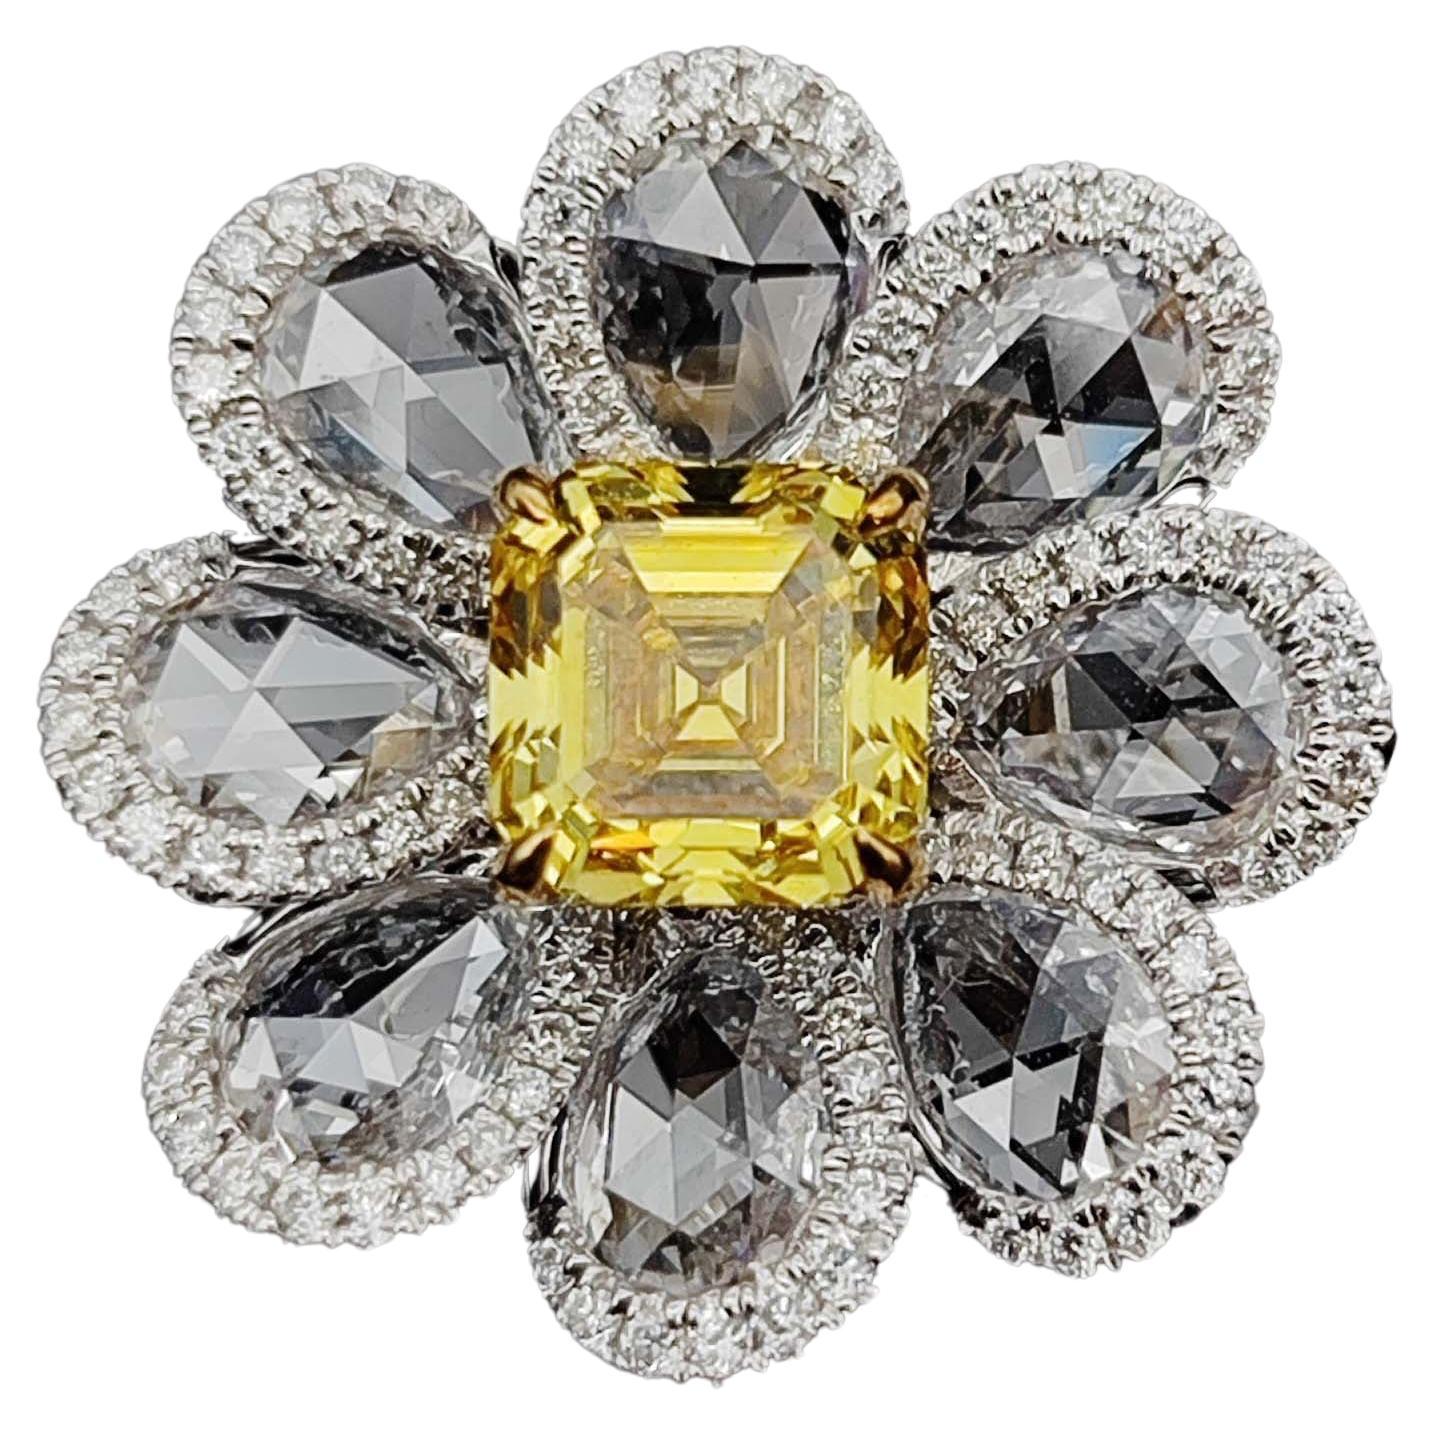 1.04 Carat Fancy Vivid Yellow Diamond Flower Cocktail Ring GIA Report, 18k Gold